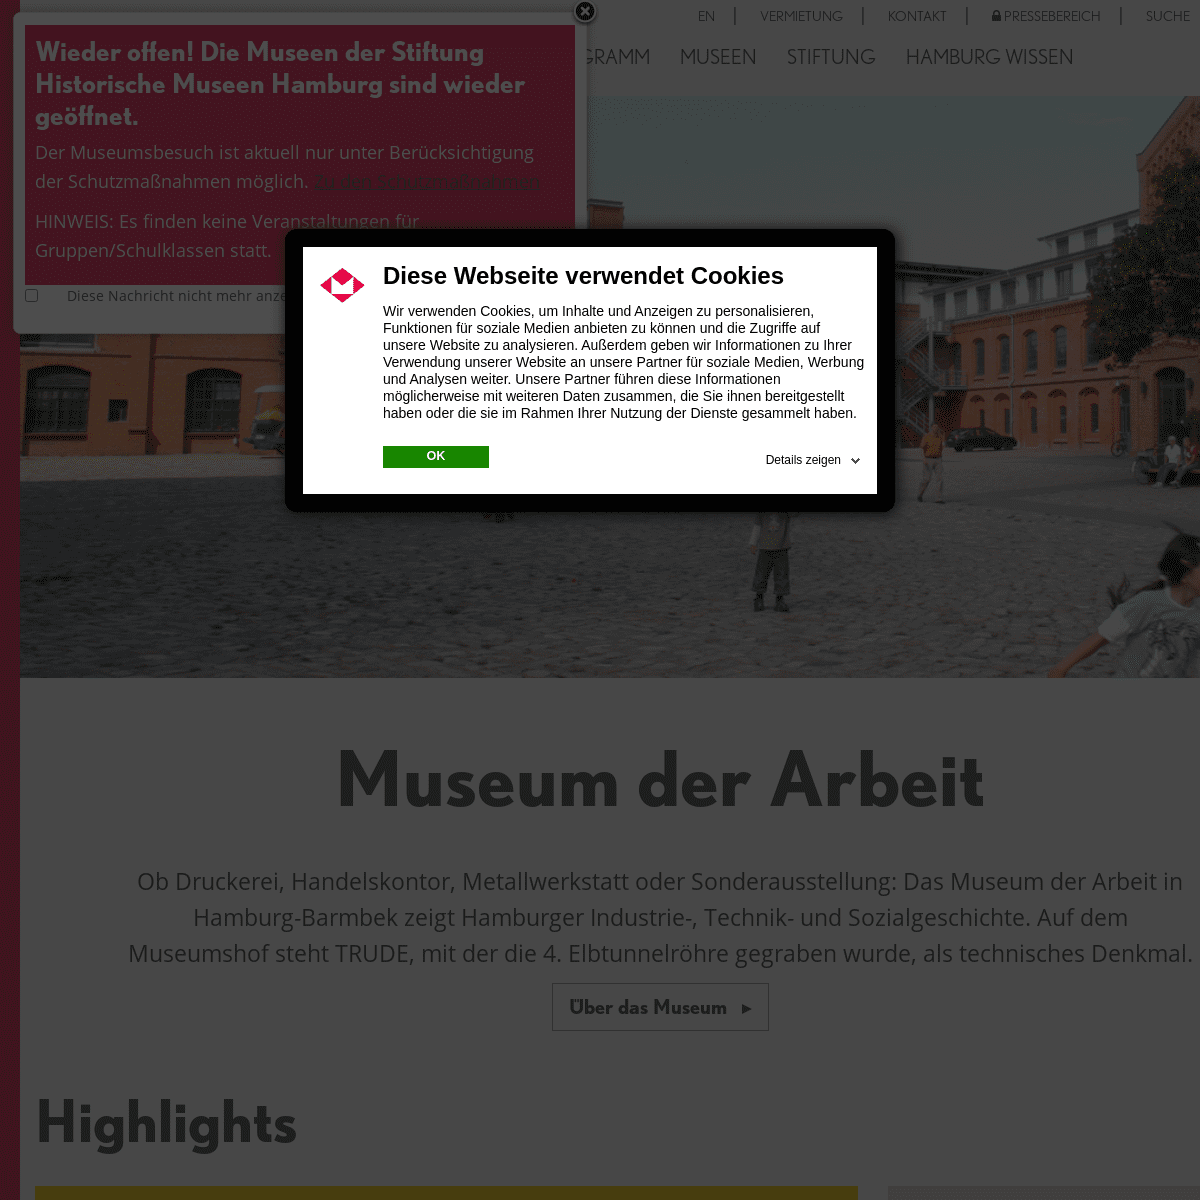 A complete backup of https://museum-der-arbeit.de